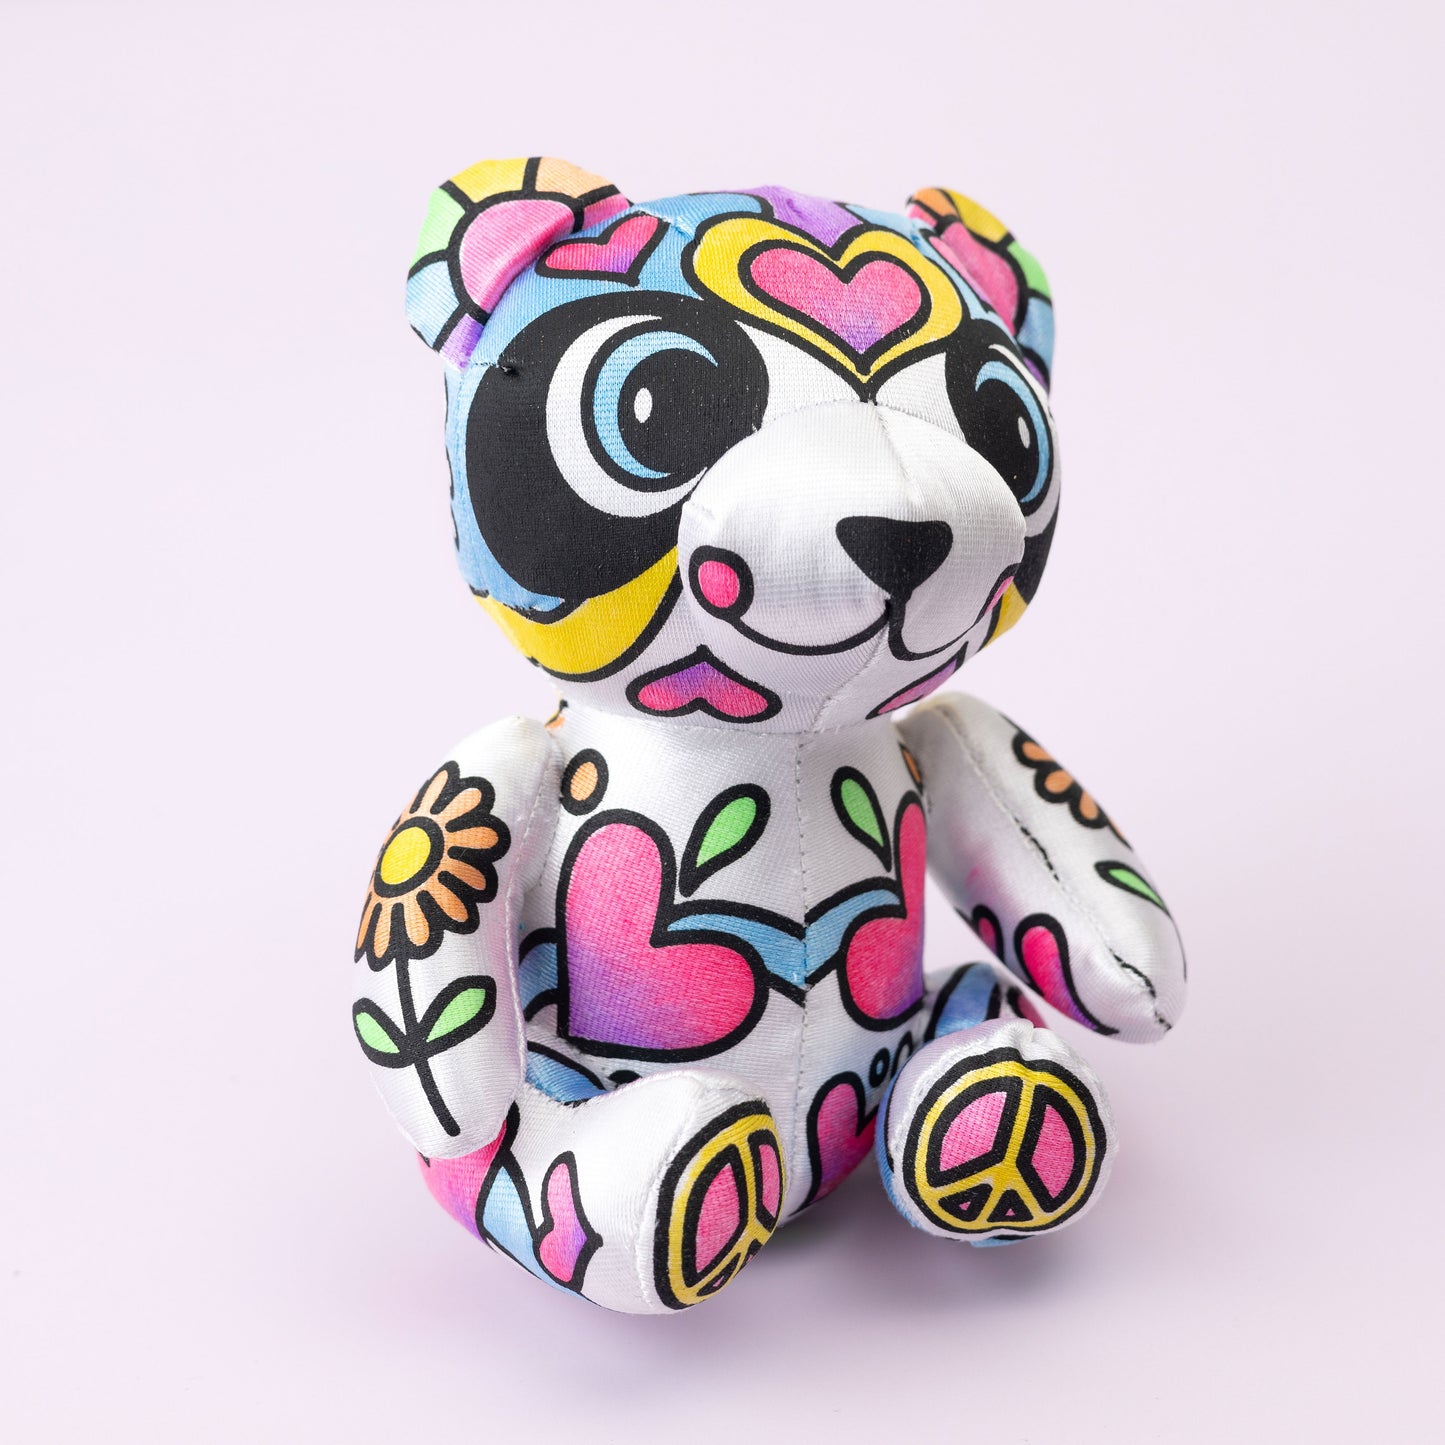 Colorbok Make It Colorful! Color Your Own Plush-Panda